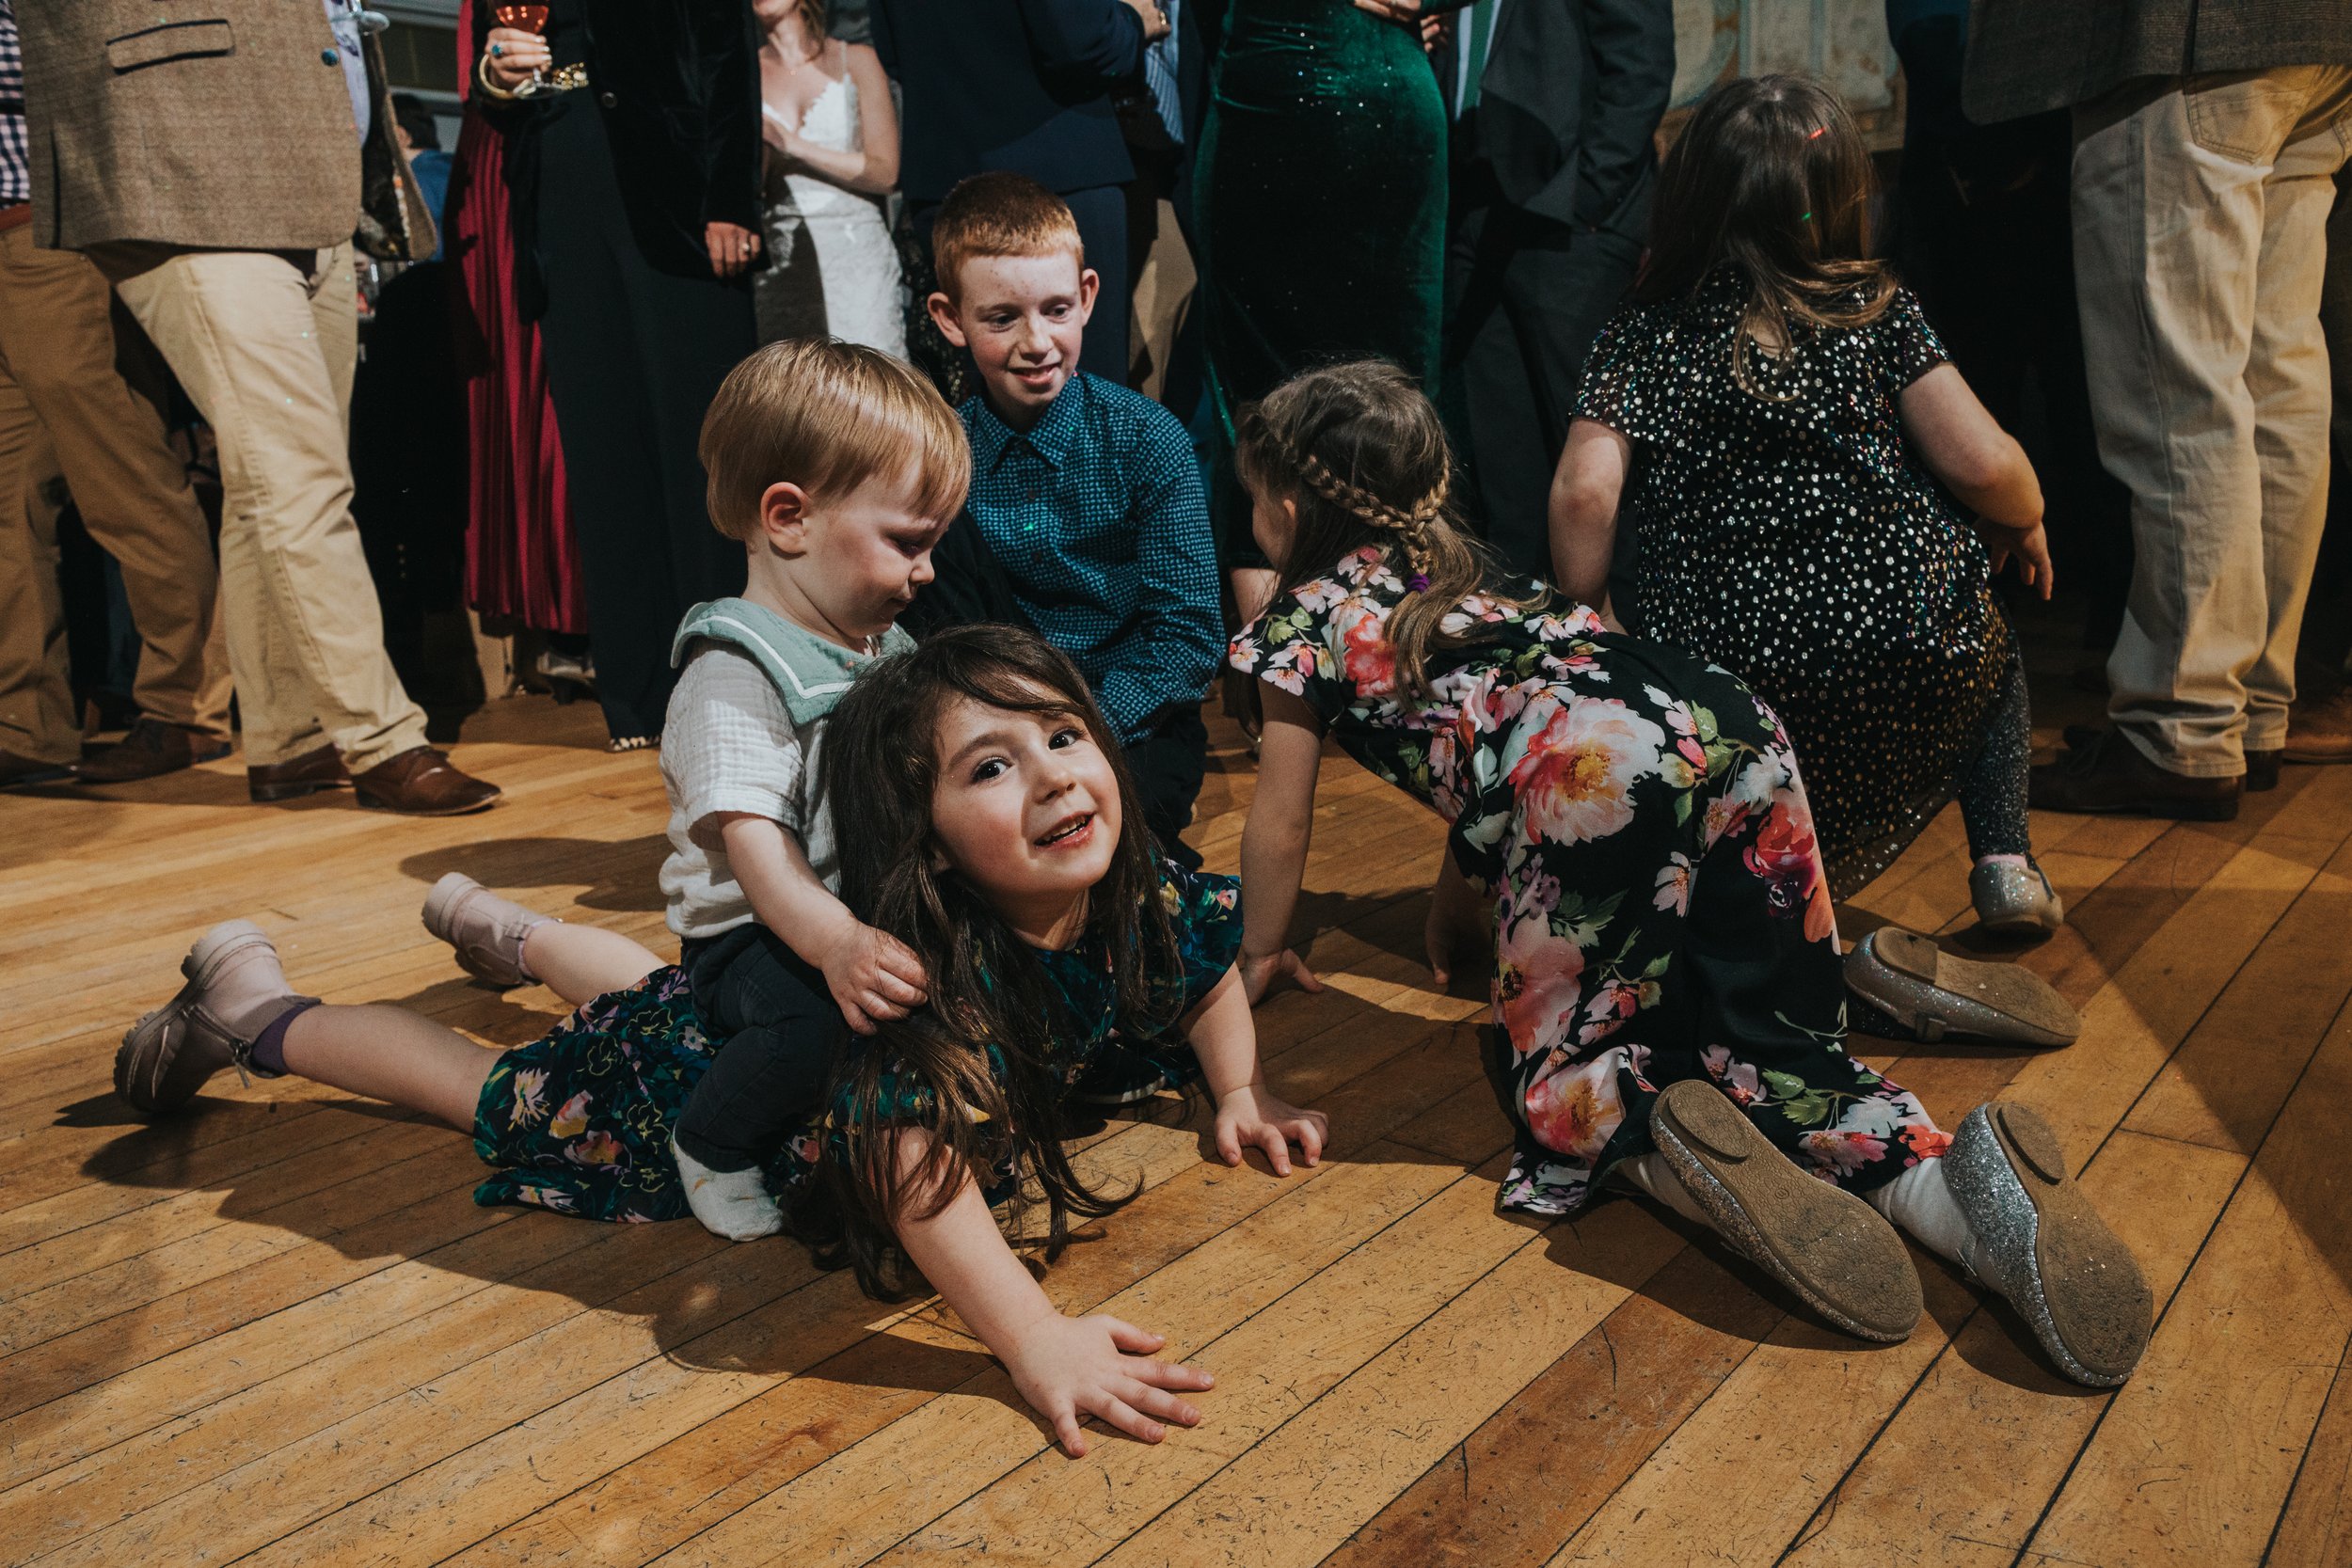 Children climbing on each others backs on the dance floor. 